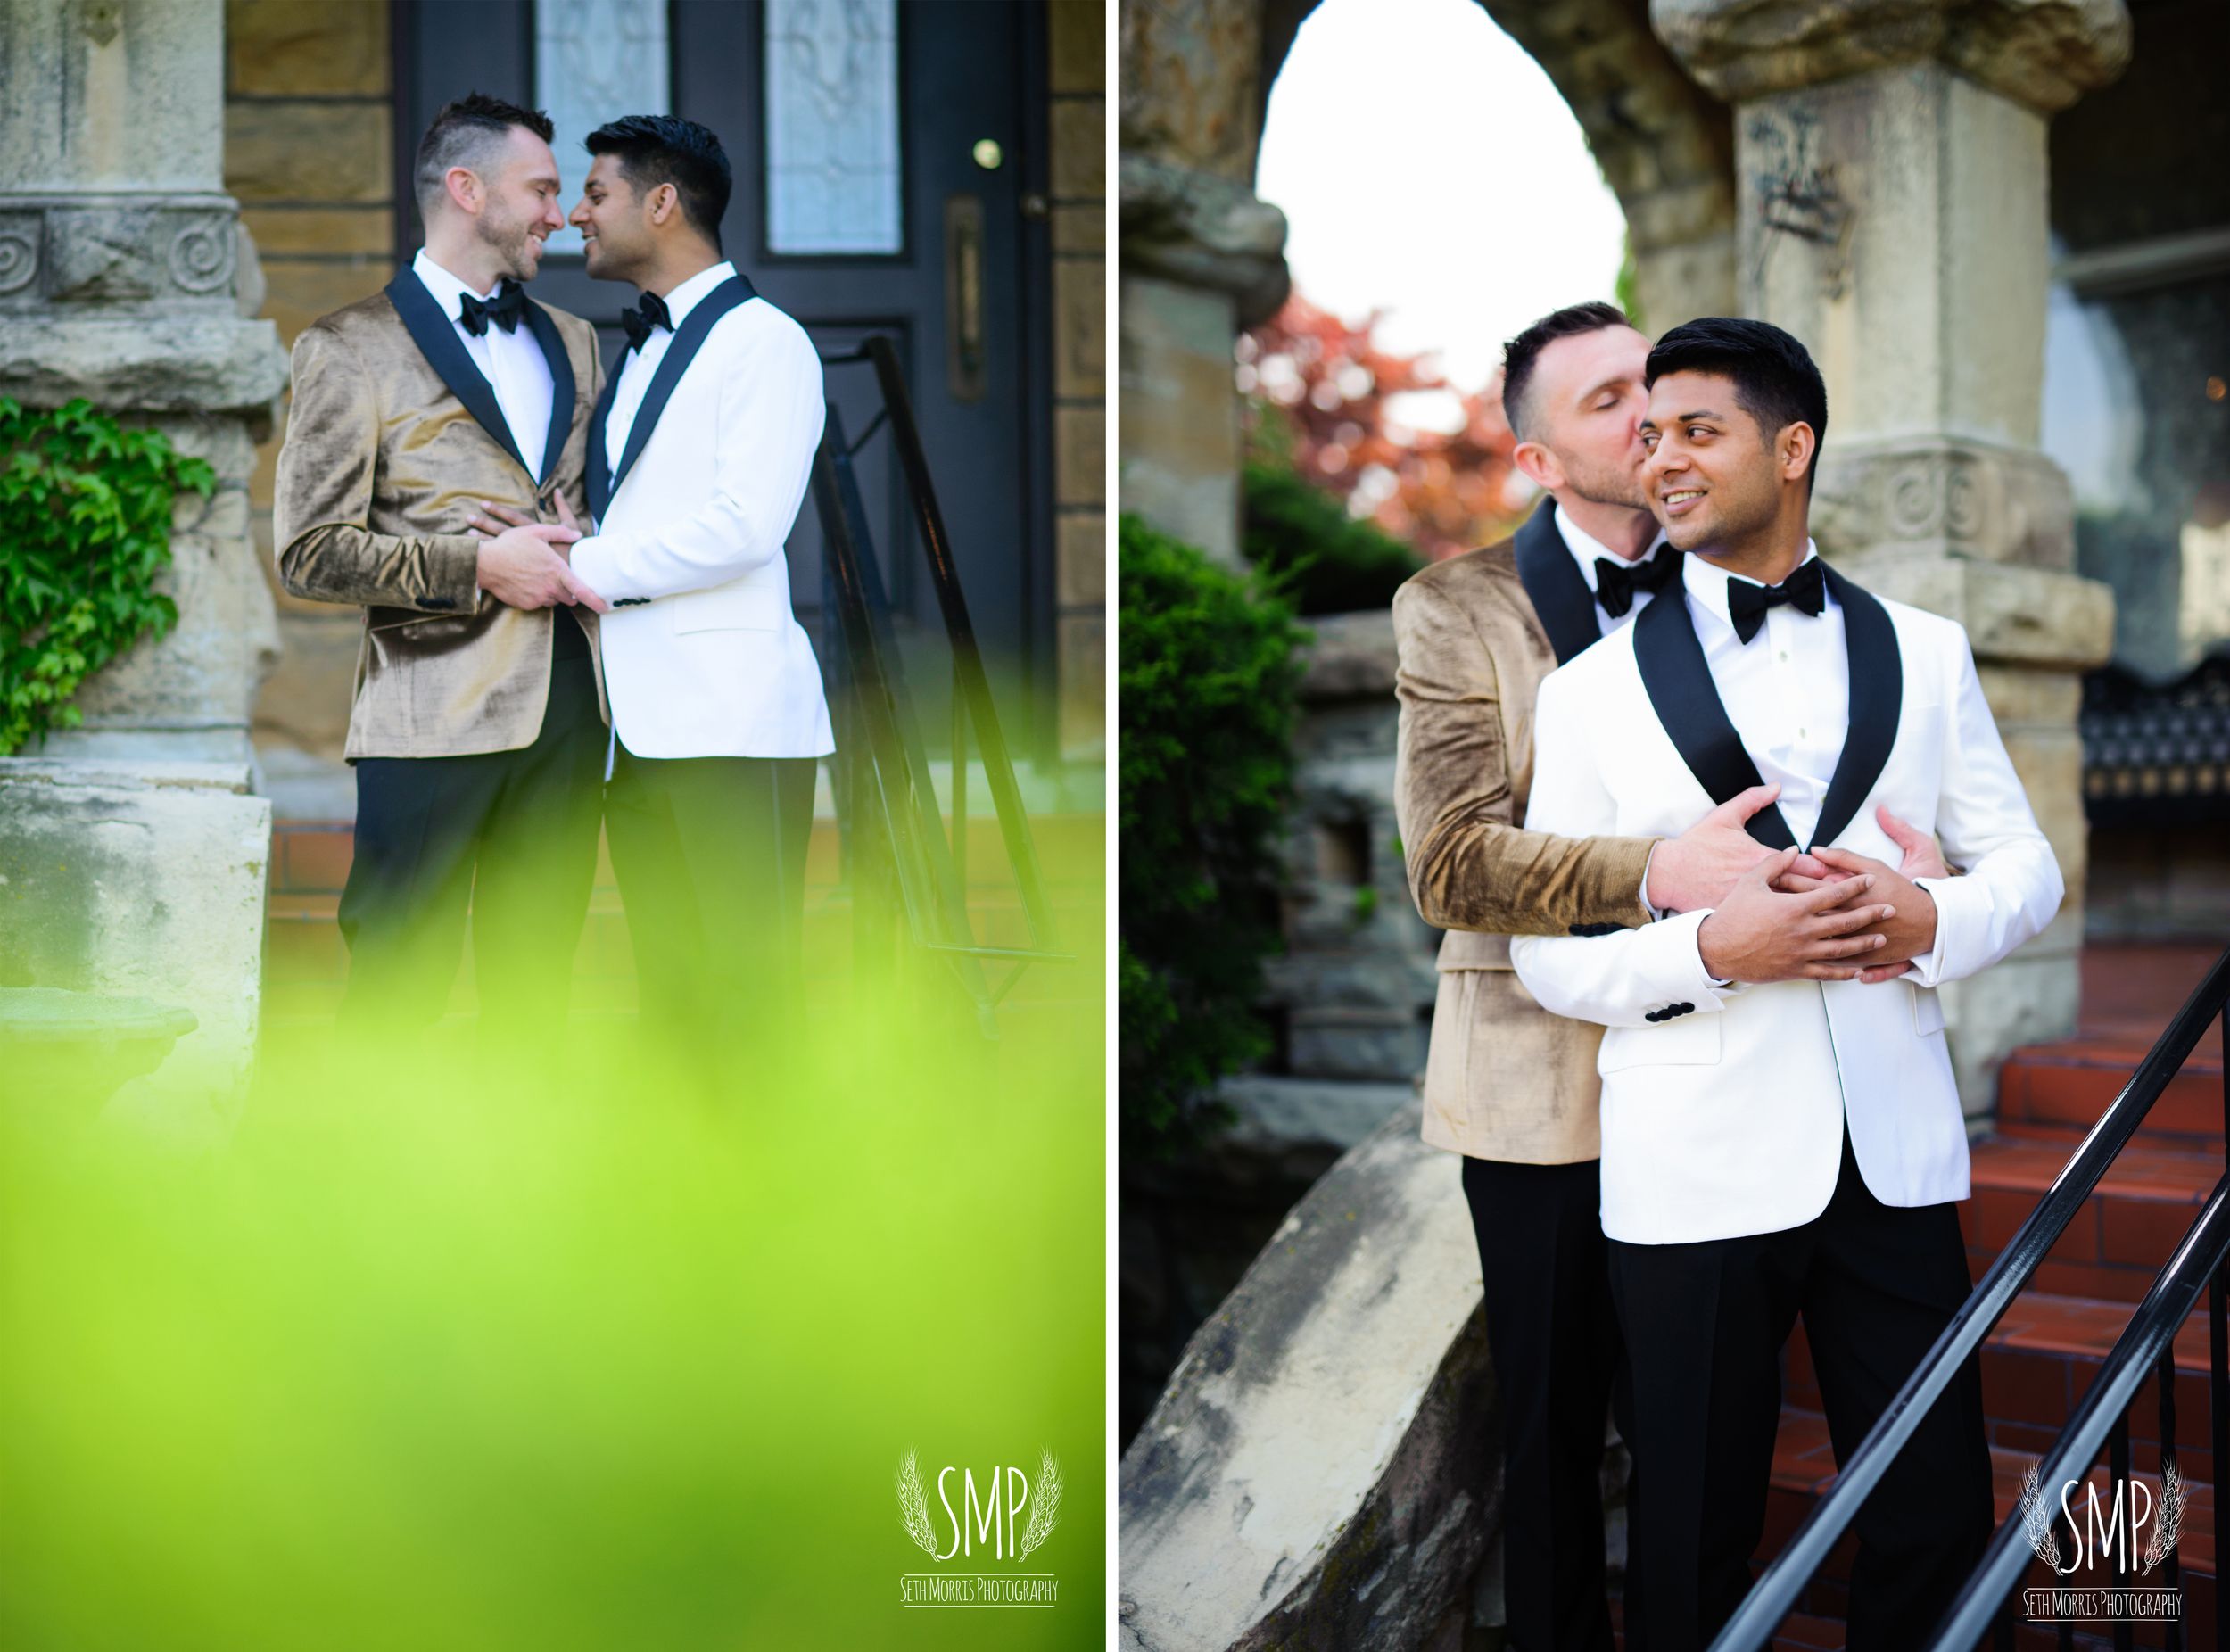 same-sex-wedding-photographer-chicago-illinois-7.jpg